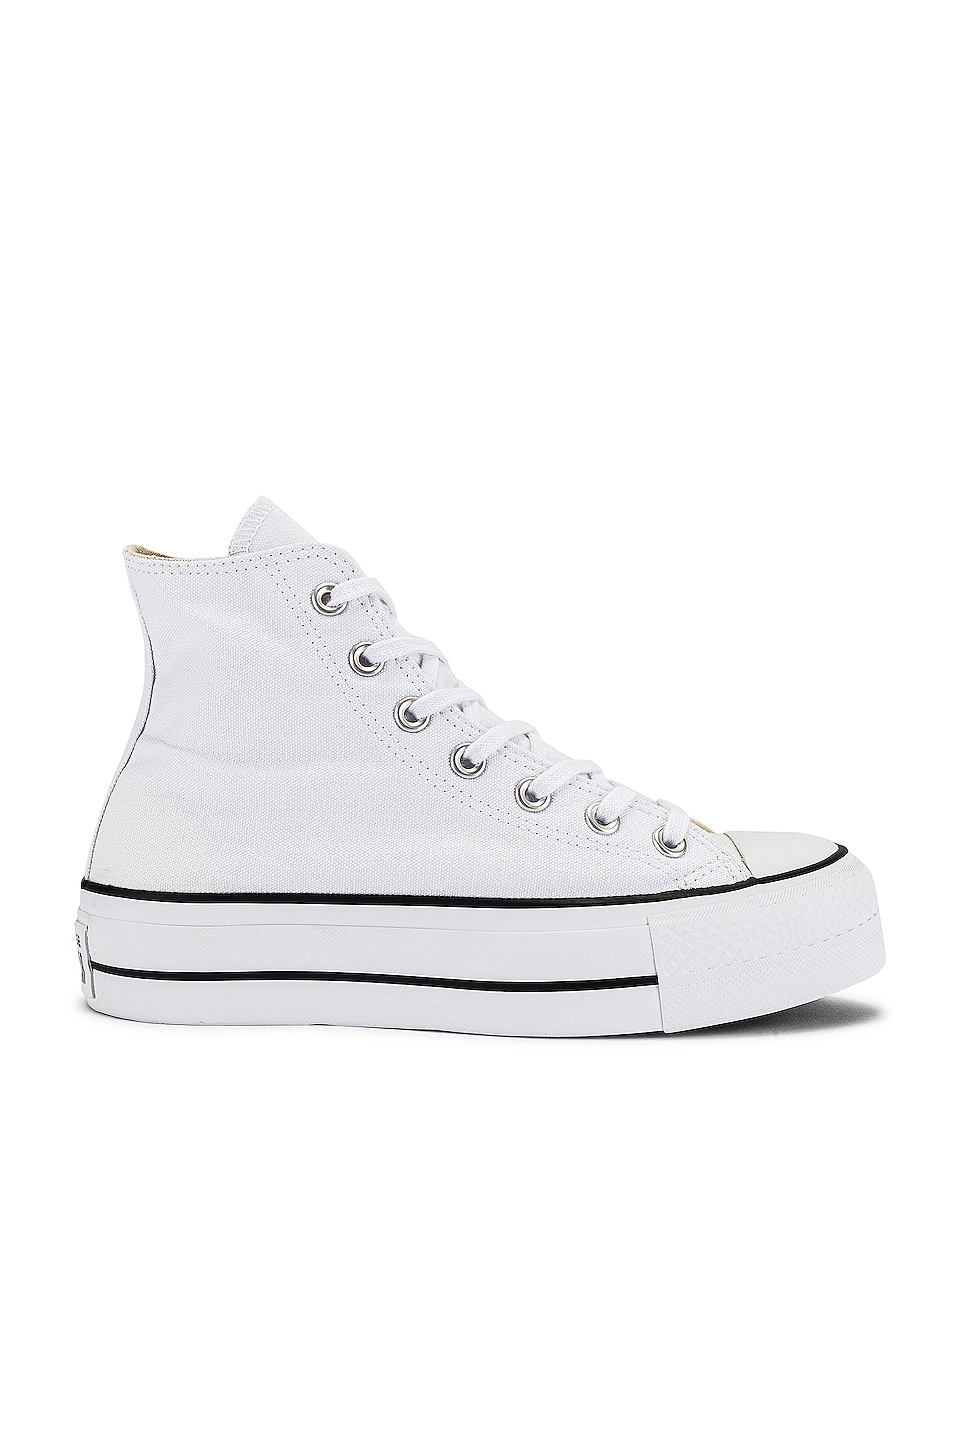 Converse Chuck Taylor All Star Lift Hi Sneaker in White & Black ... حبة الملكة